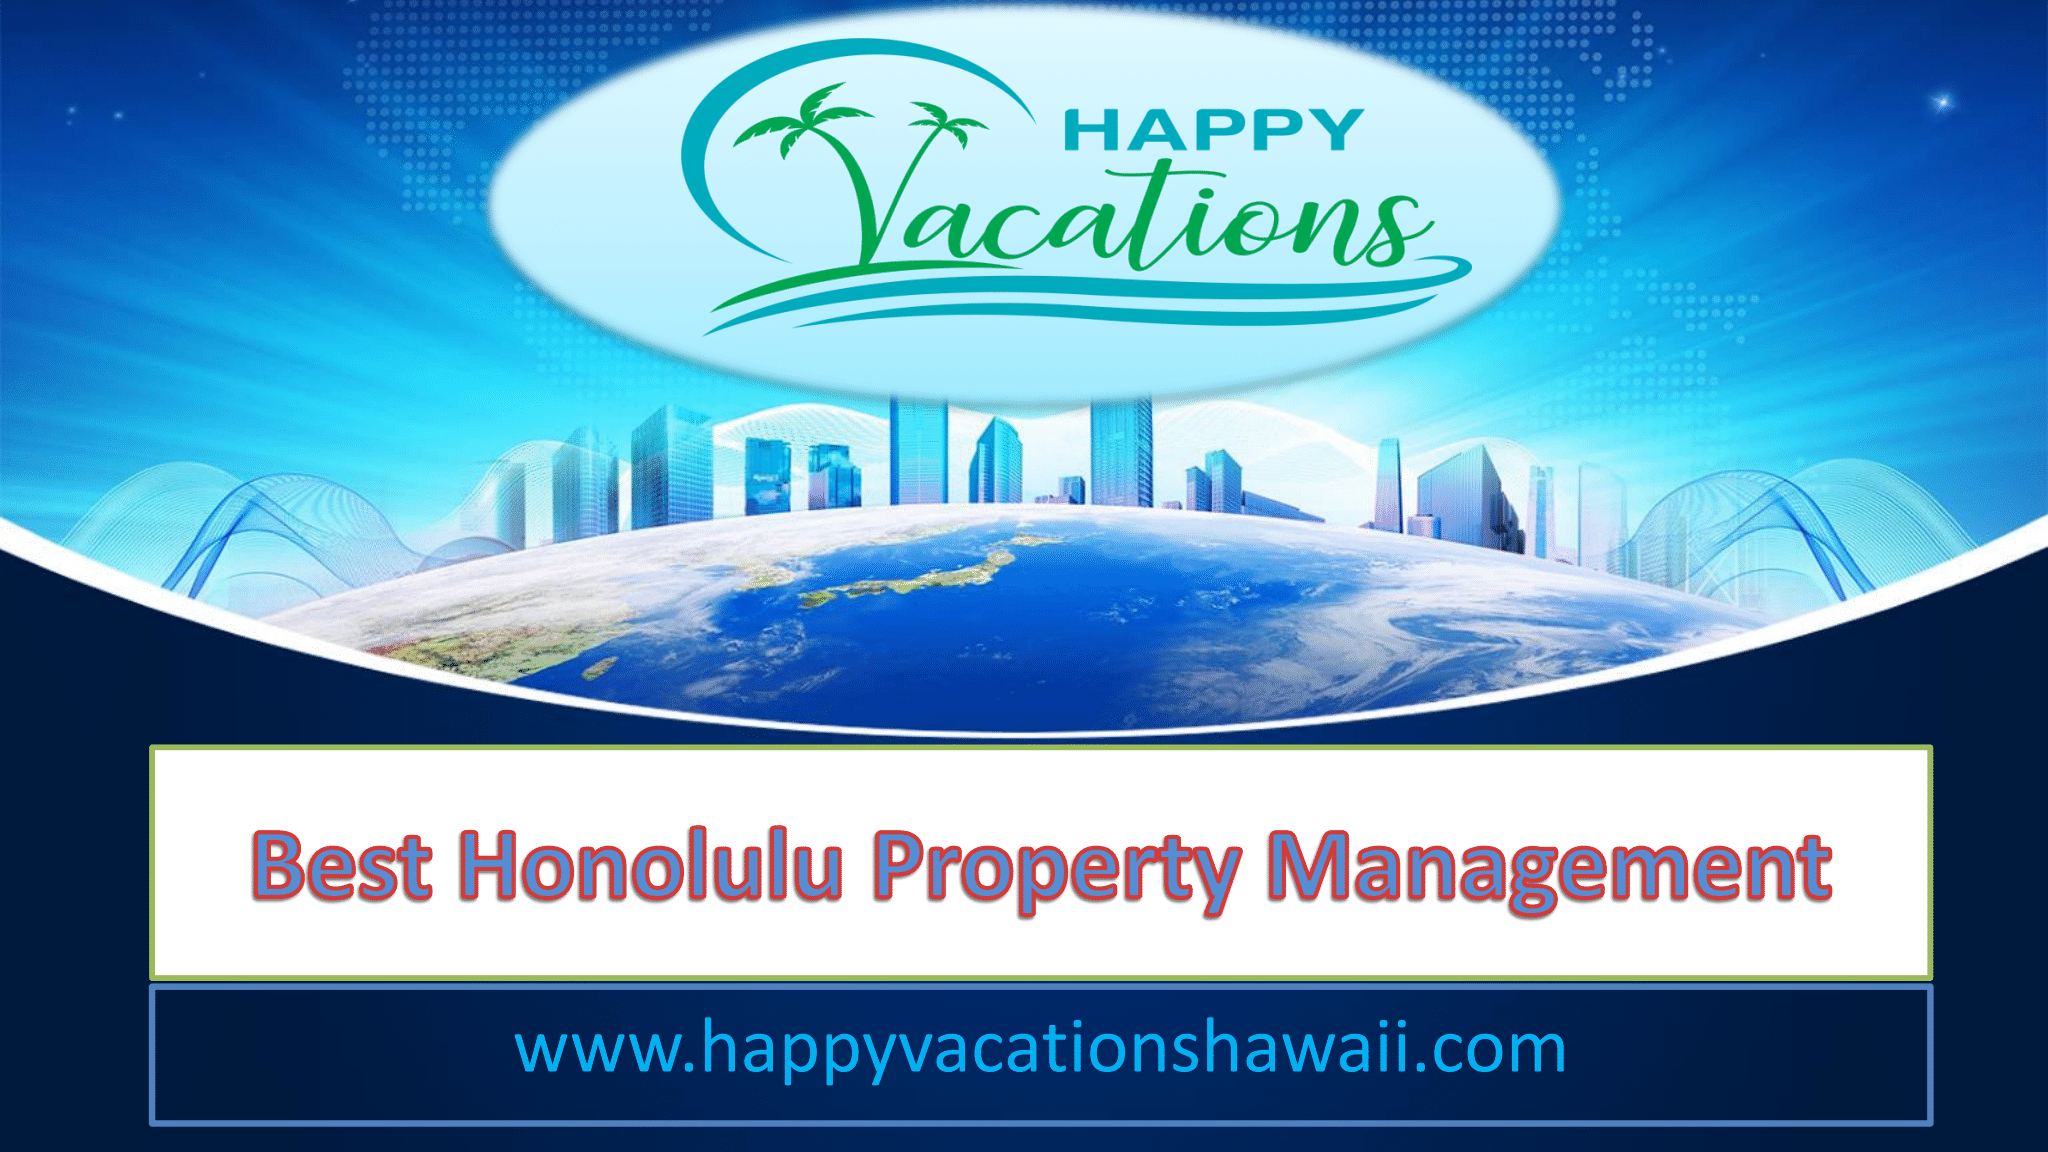 Dropbox - Best Honolulu Property Management - www.happydoorspropertymanagement.com.pptx